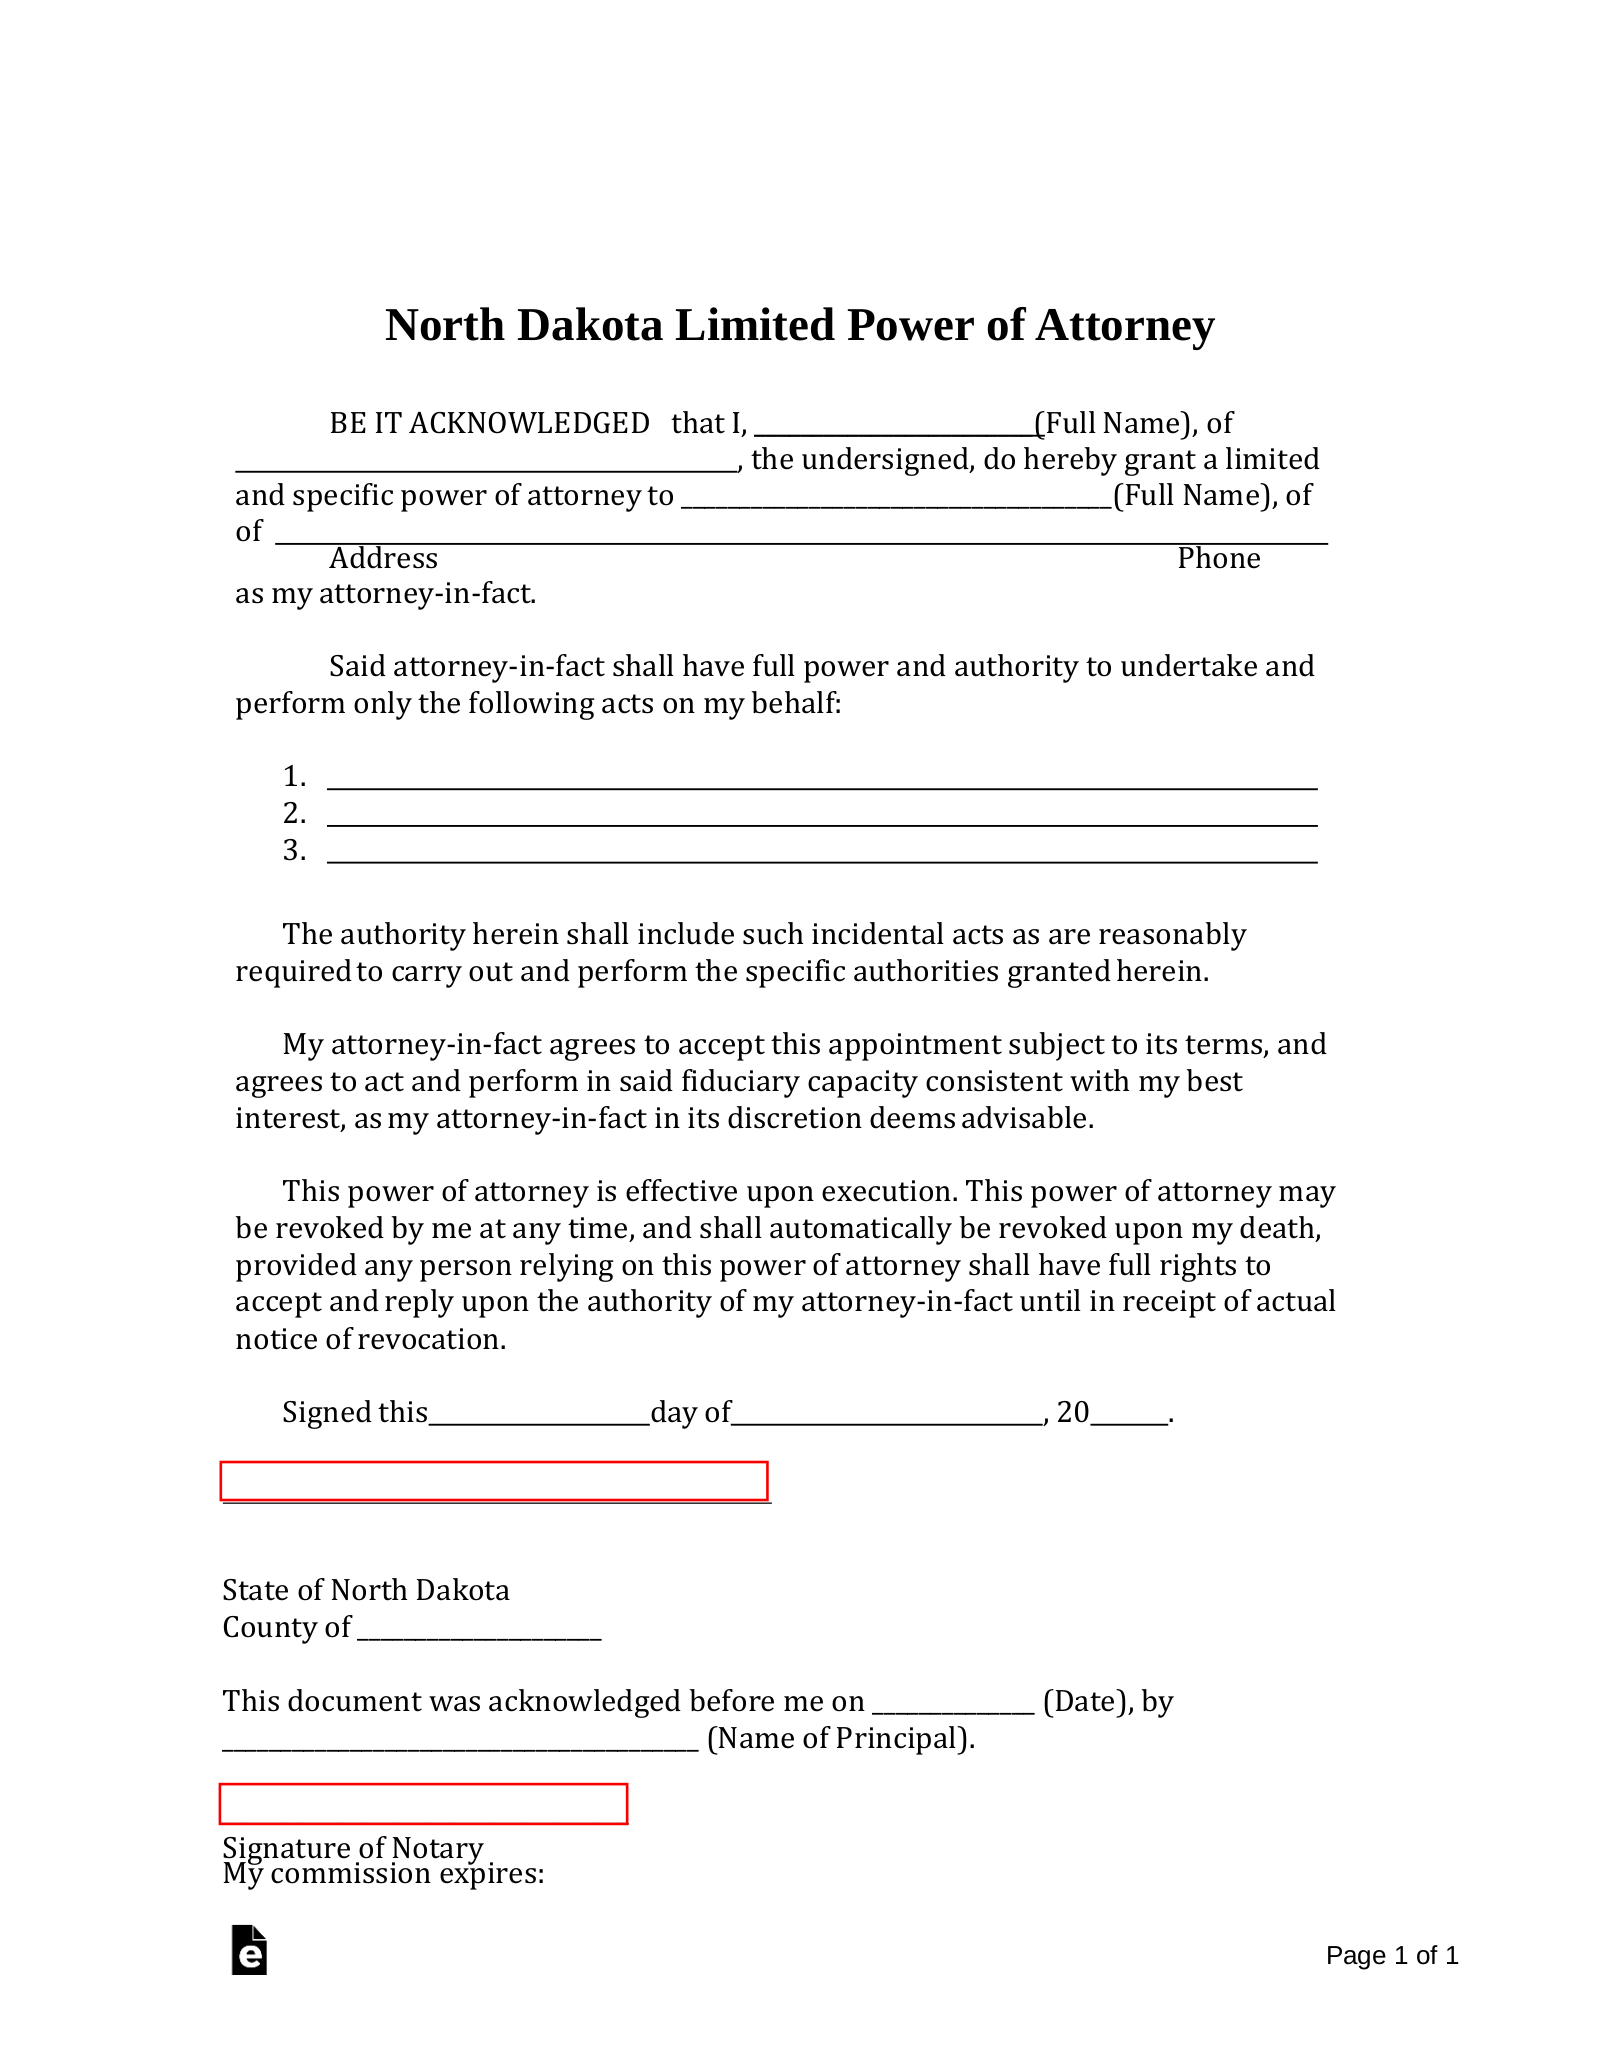 free-north-dakota-limited-power-of-attorney-form-pdf-word-eforms